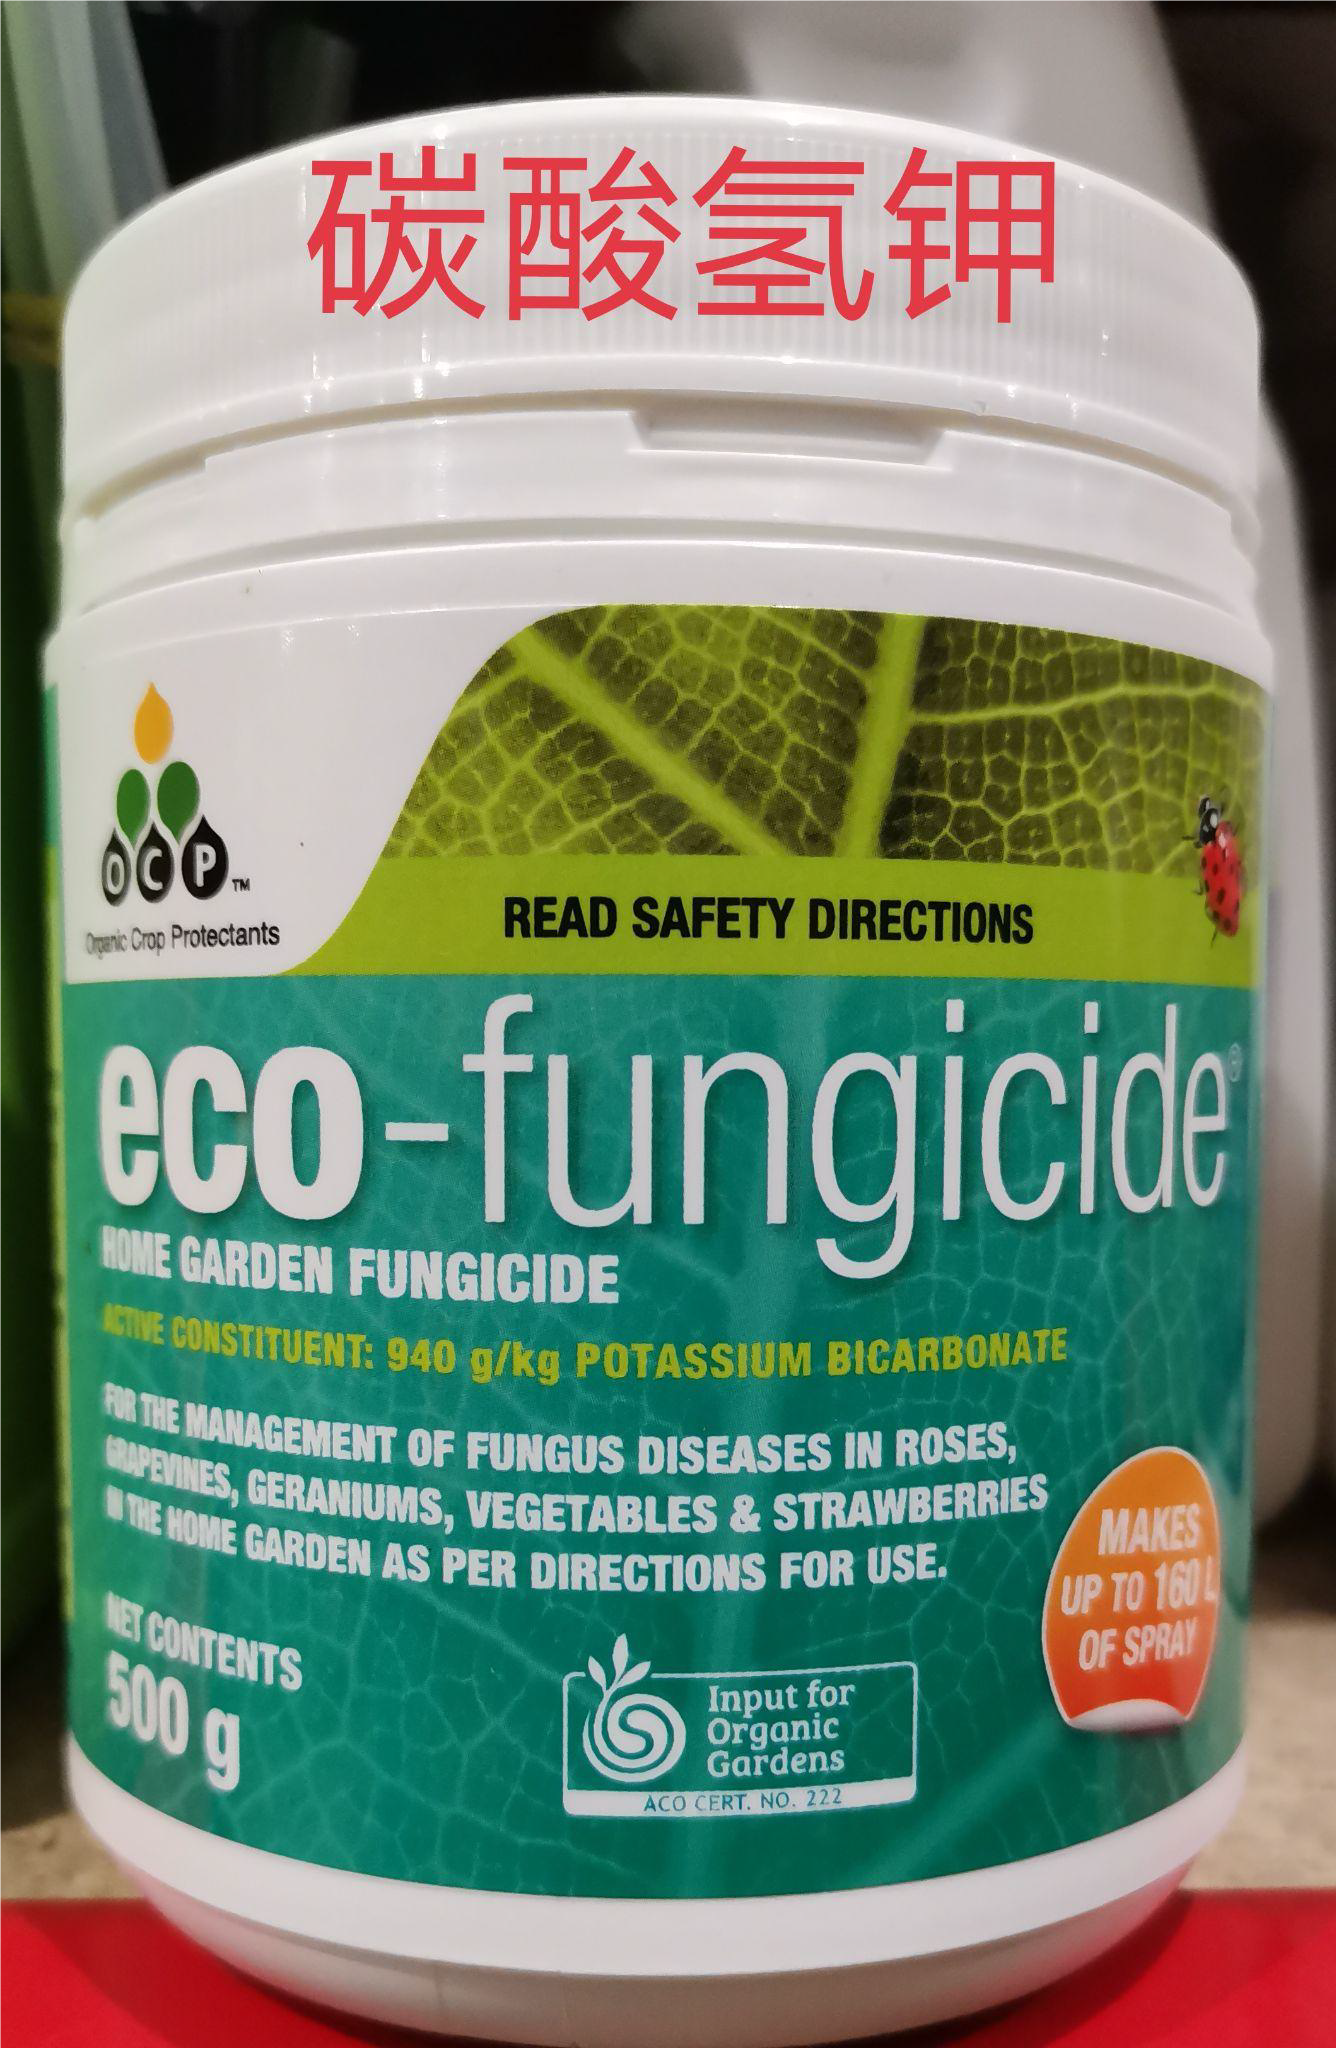 eco-fungicide